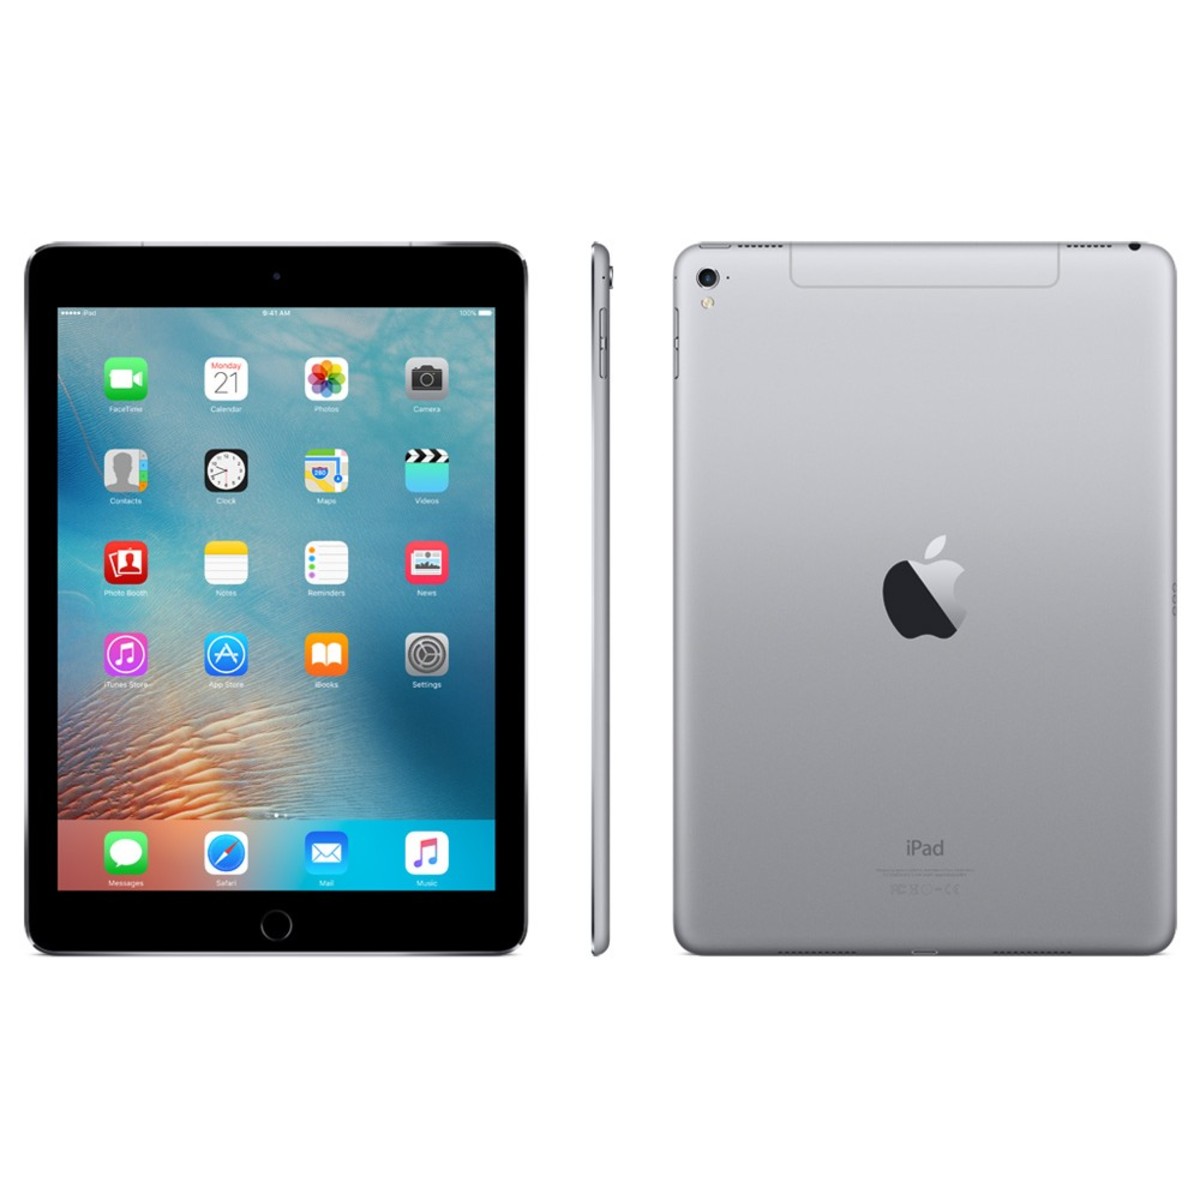 Apple iPad Pro Wi-Fi + Cellular 9.7inch 32GB Space Gray